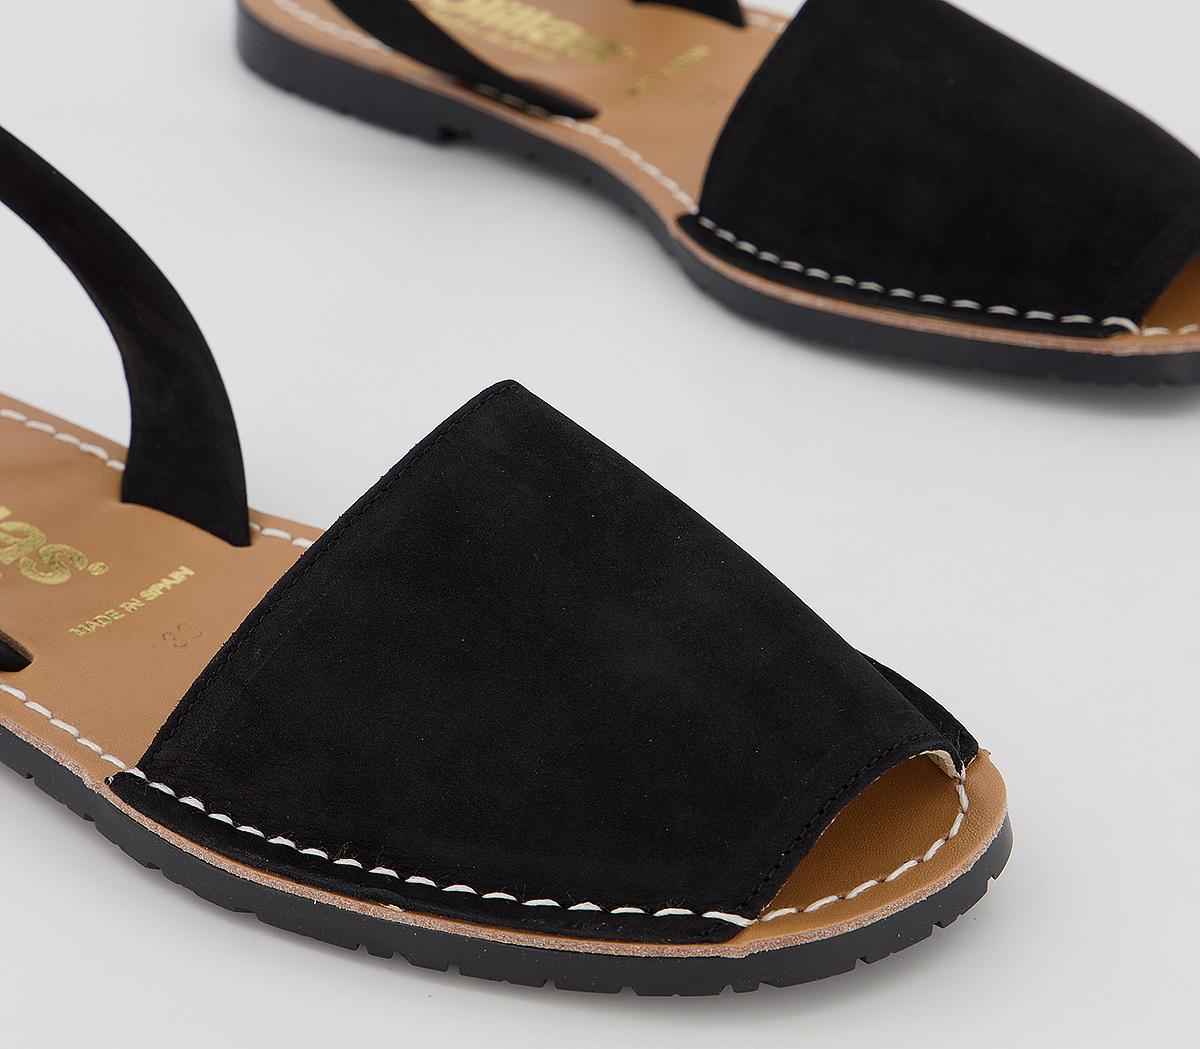 Solillas Solillas Sandals Black - Women’s Sandals